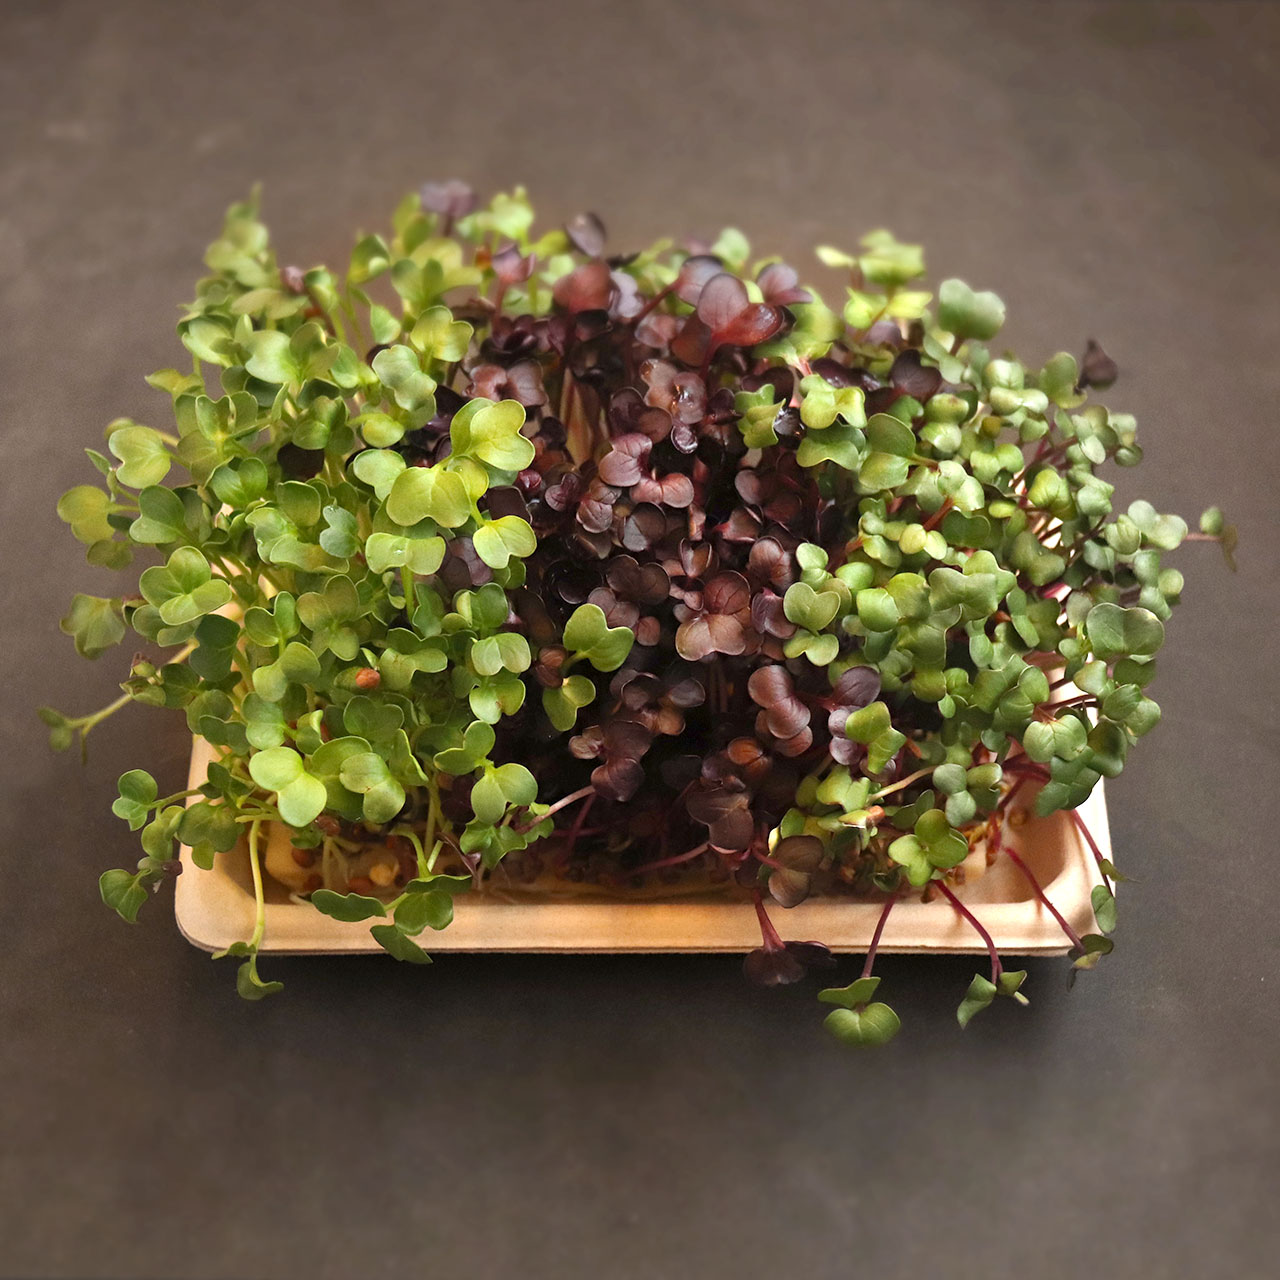 Home grow kit - fully grown microgreens